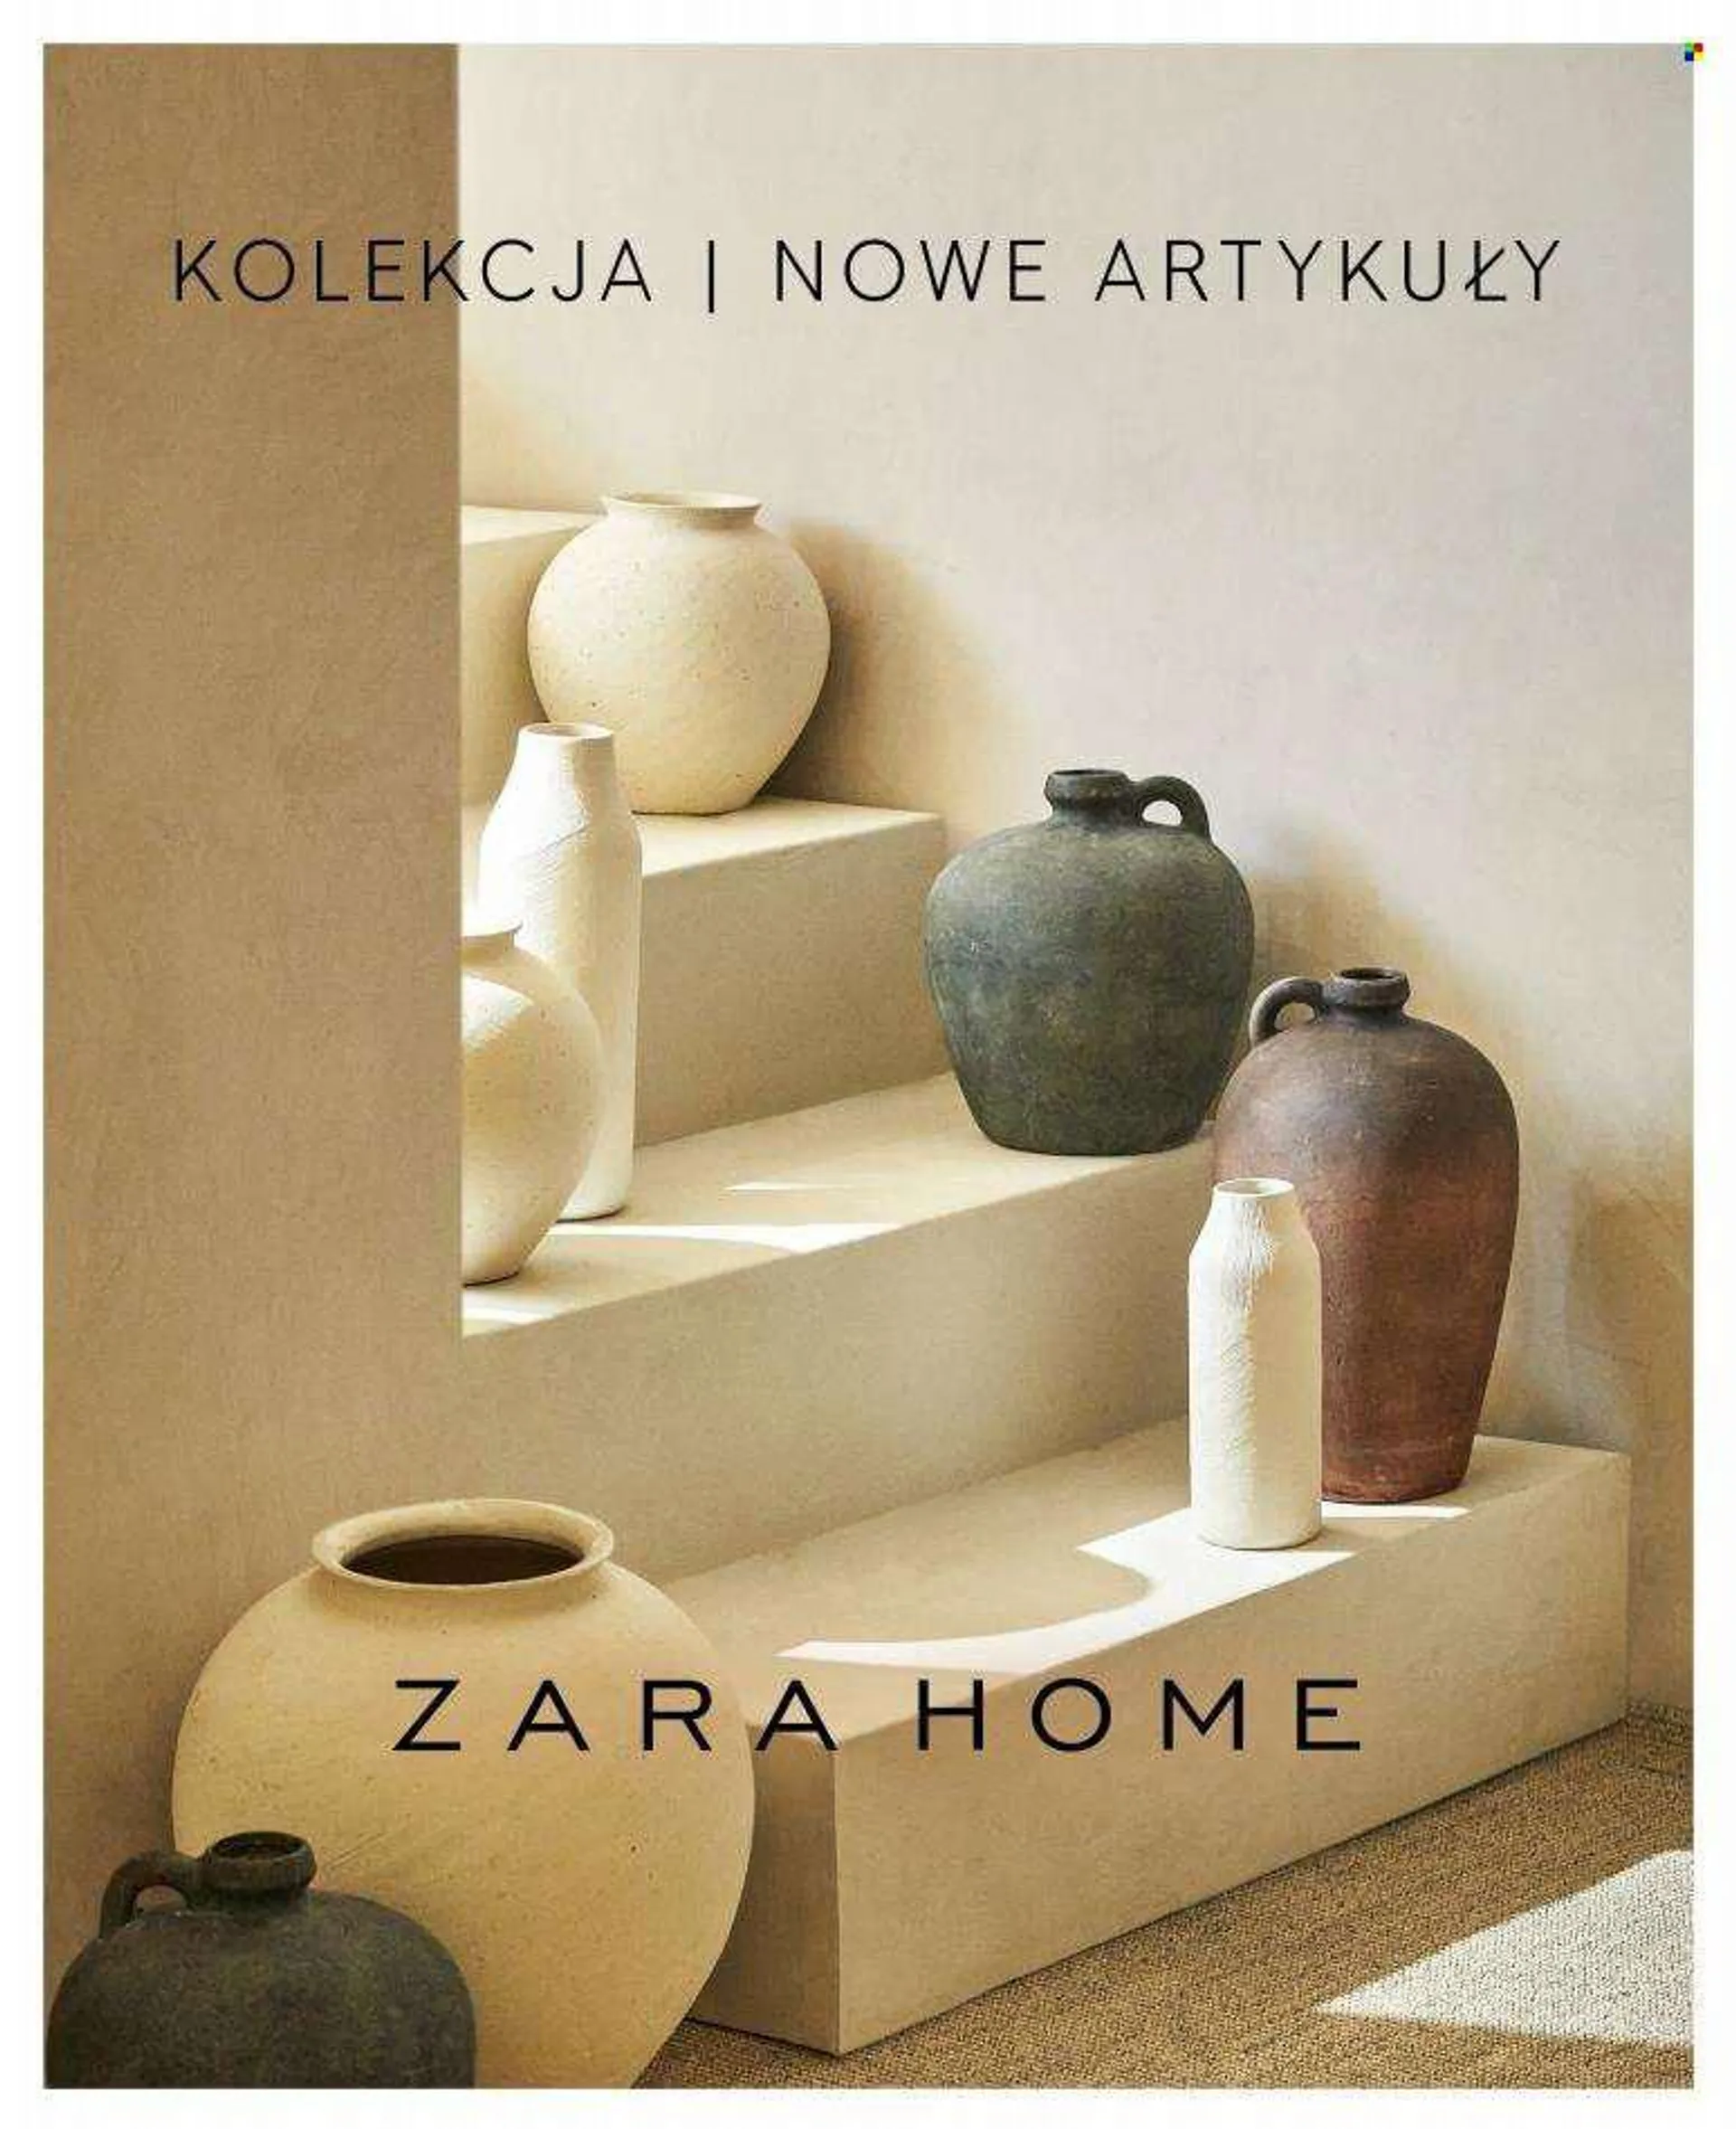 Gazetka ZARA Home. Strona 1.